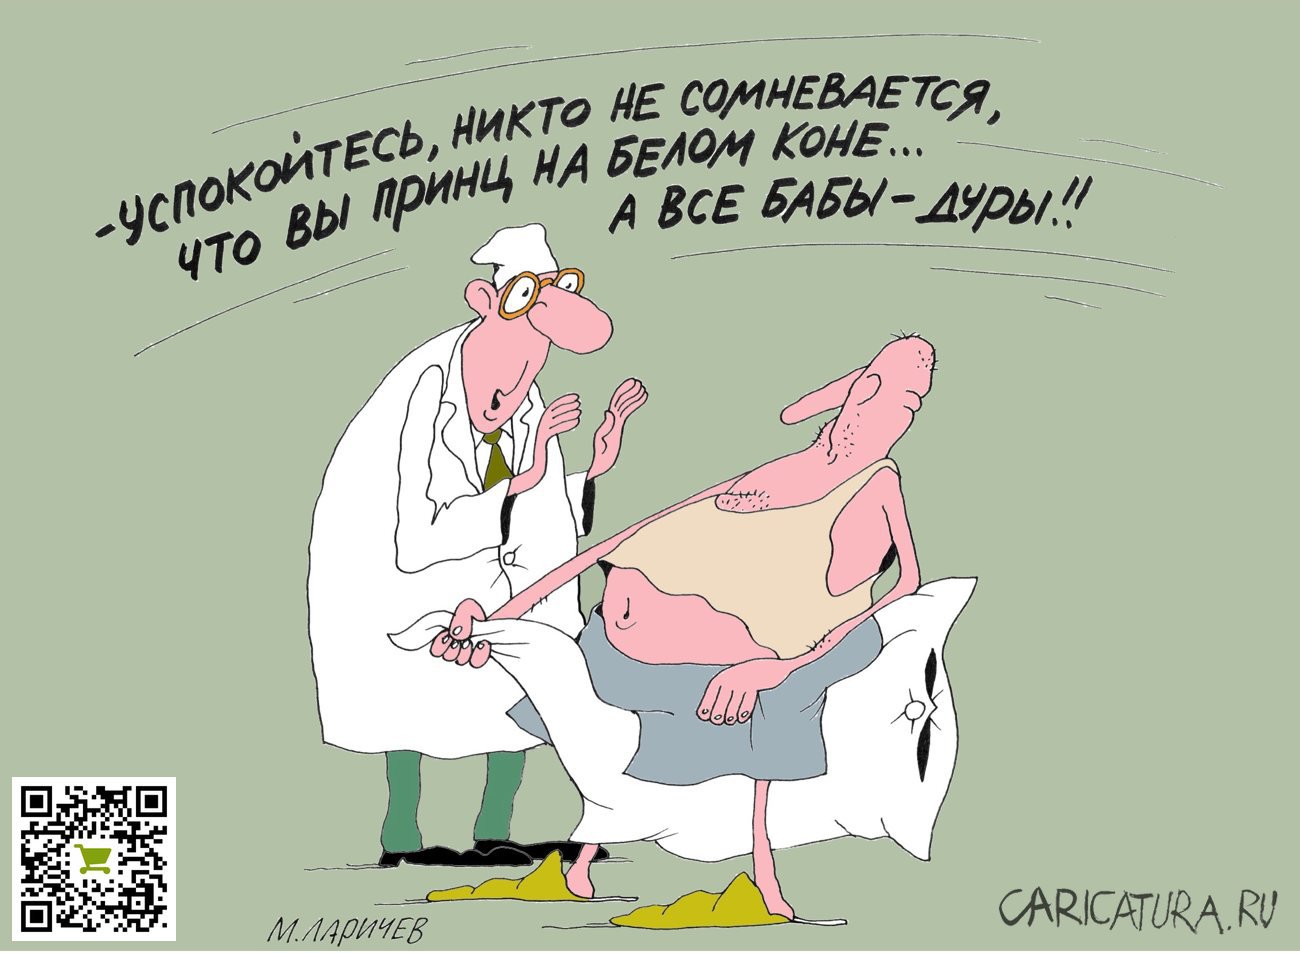 Карикатура "Без сомнений", Михаил Ларичев